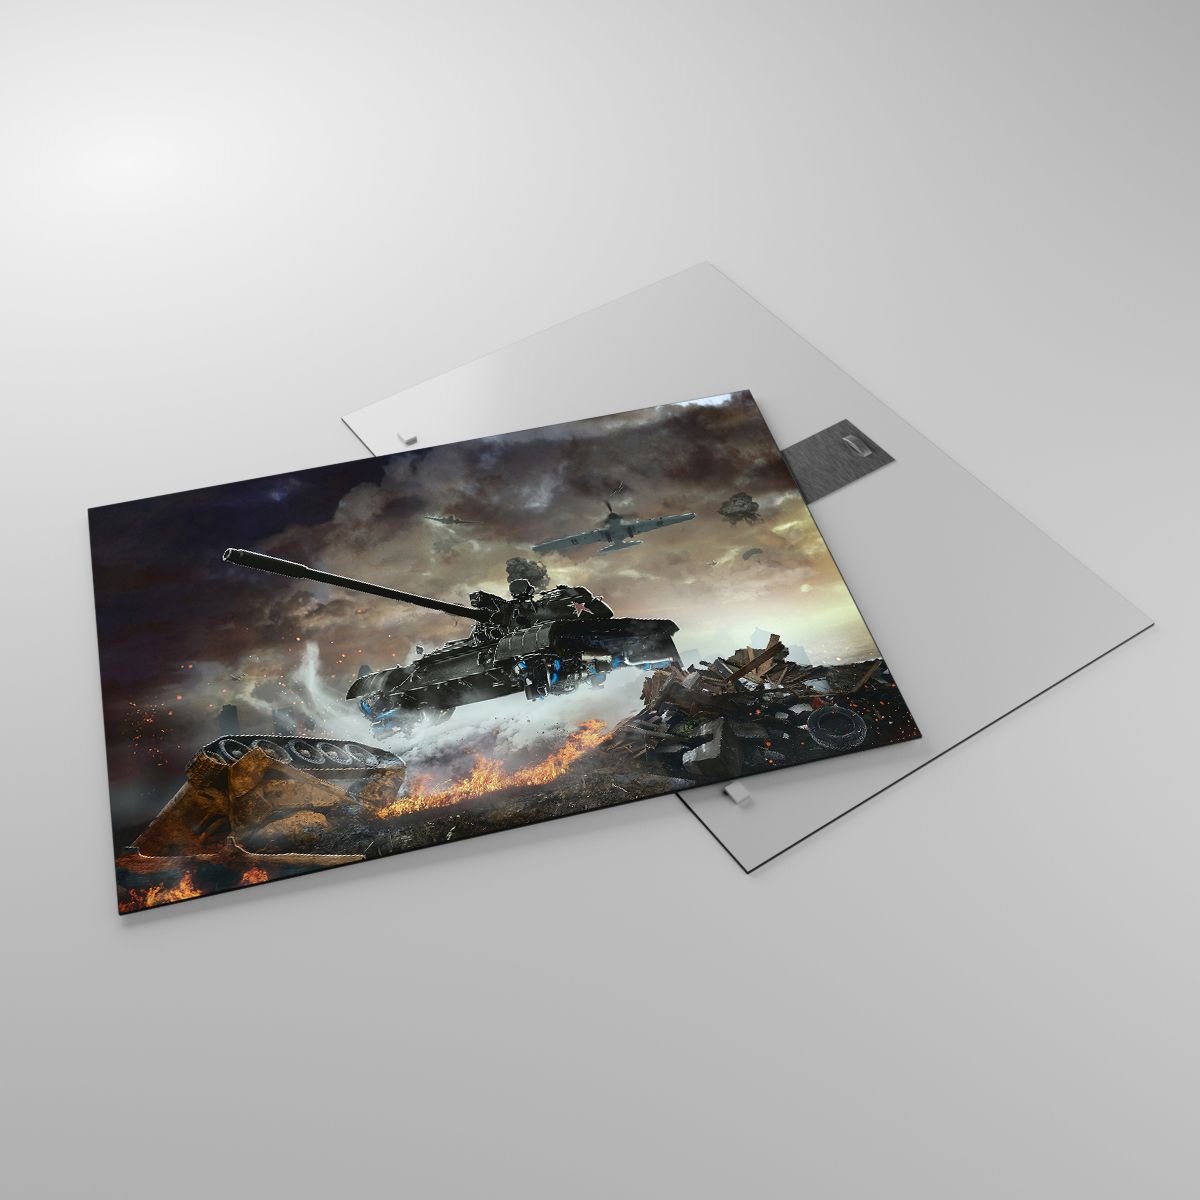 Glasbild Militär, Glasbild Krieg, Glasbild Panzer, Glasbild Militärflugzeug, Glasbild Schlacht